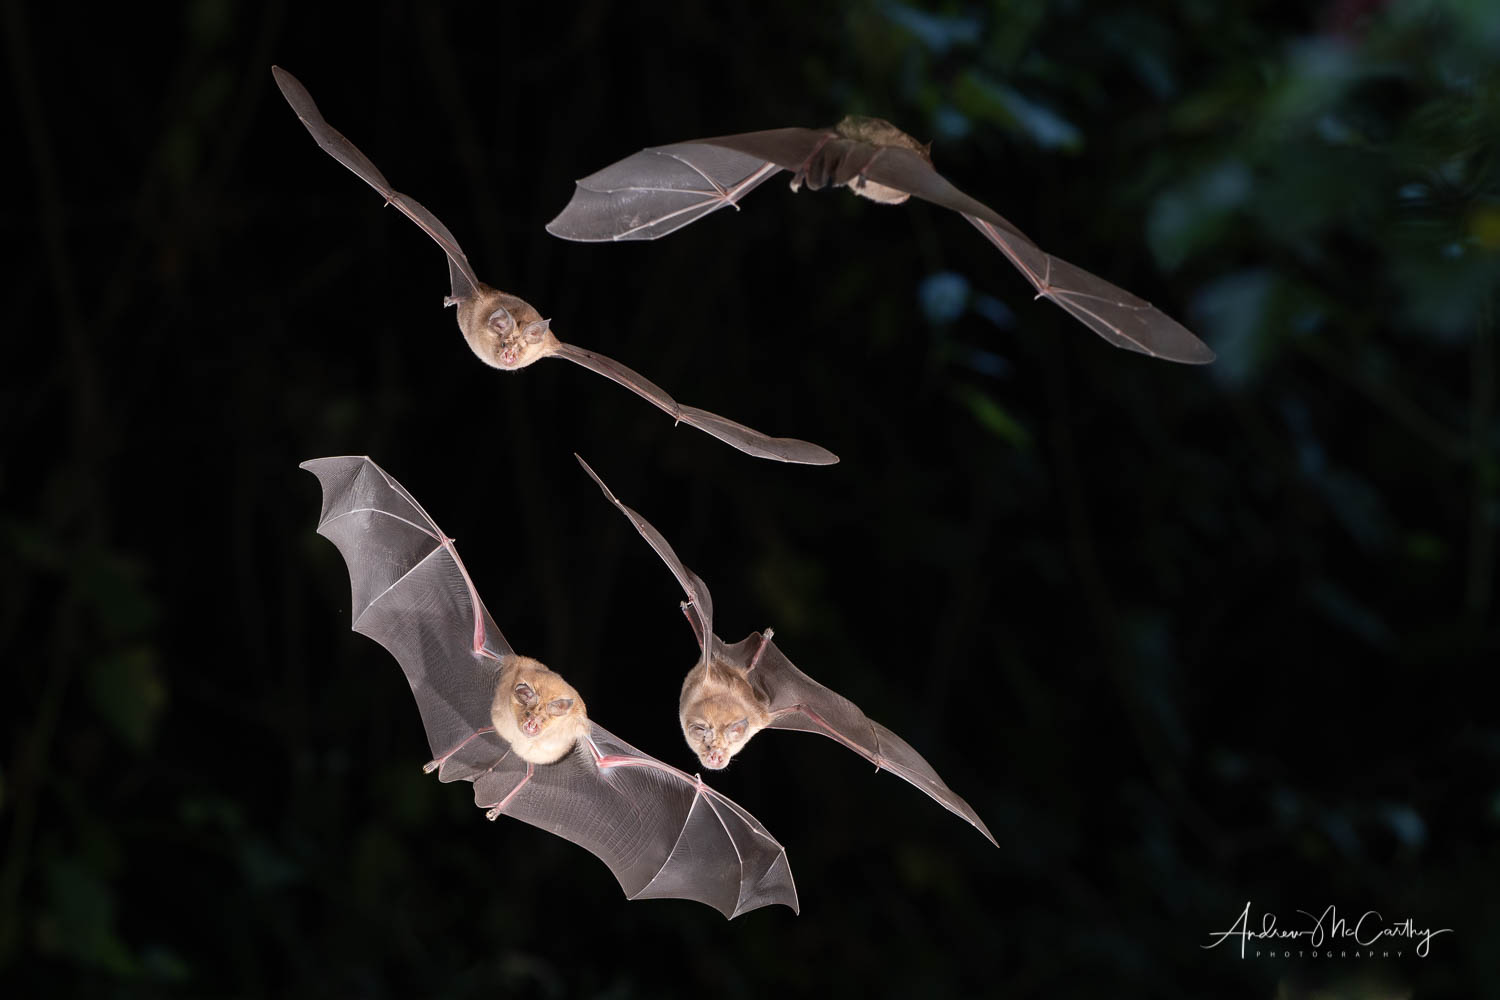 Bats in Flight - Multiple Flashes